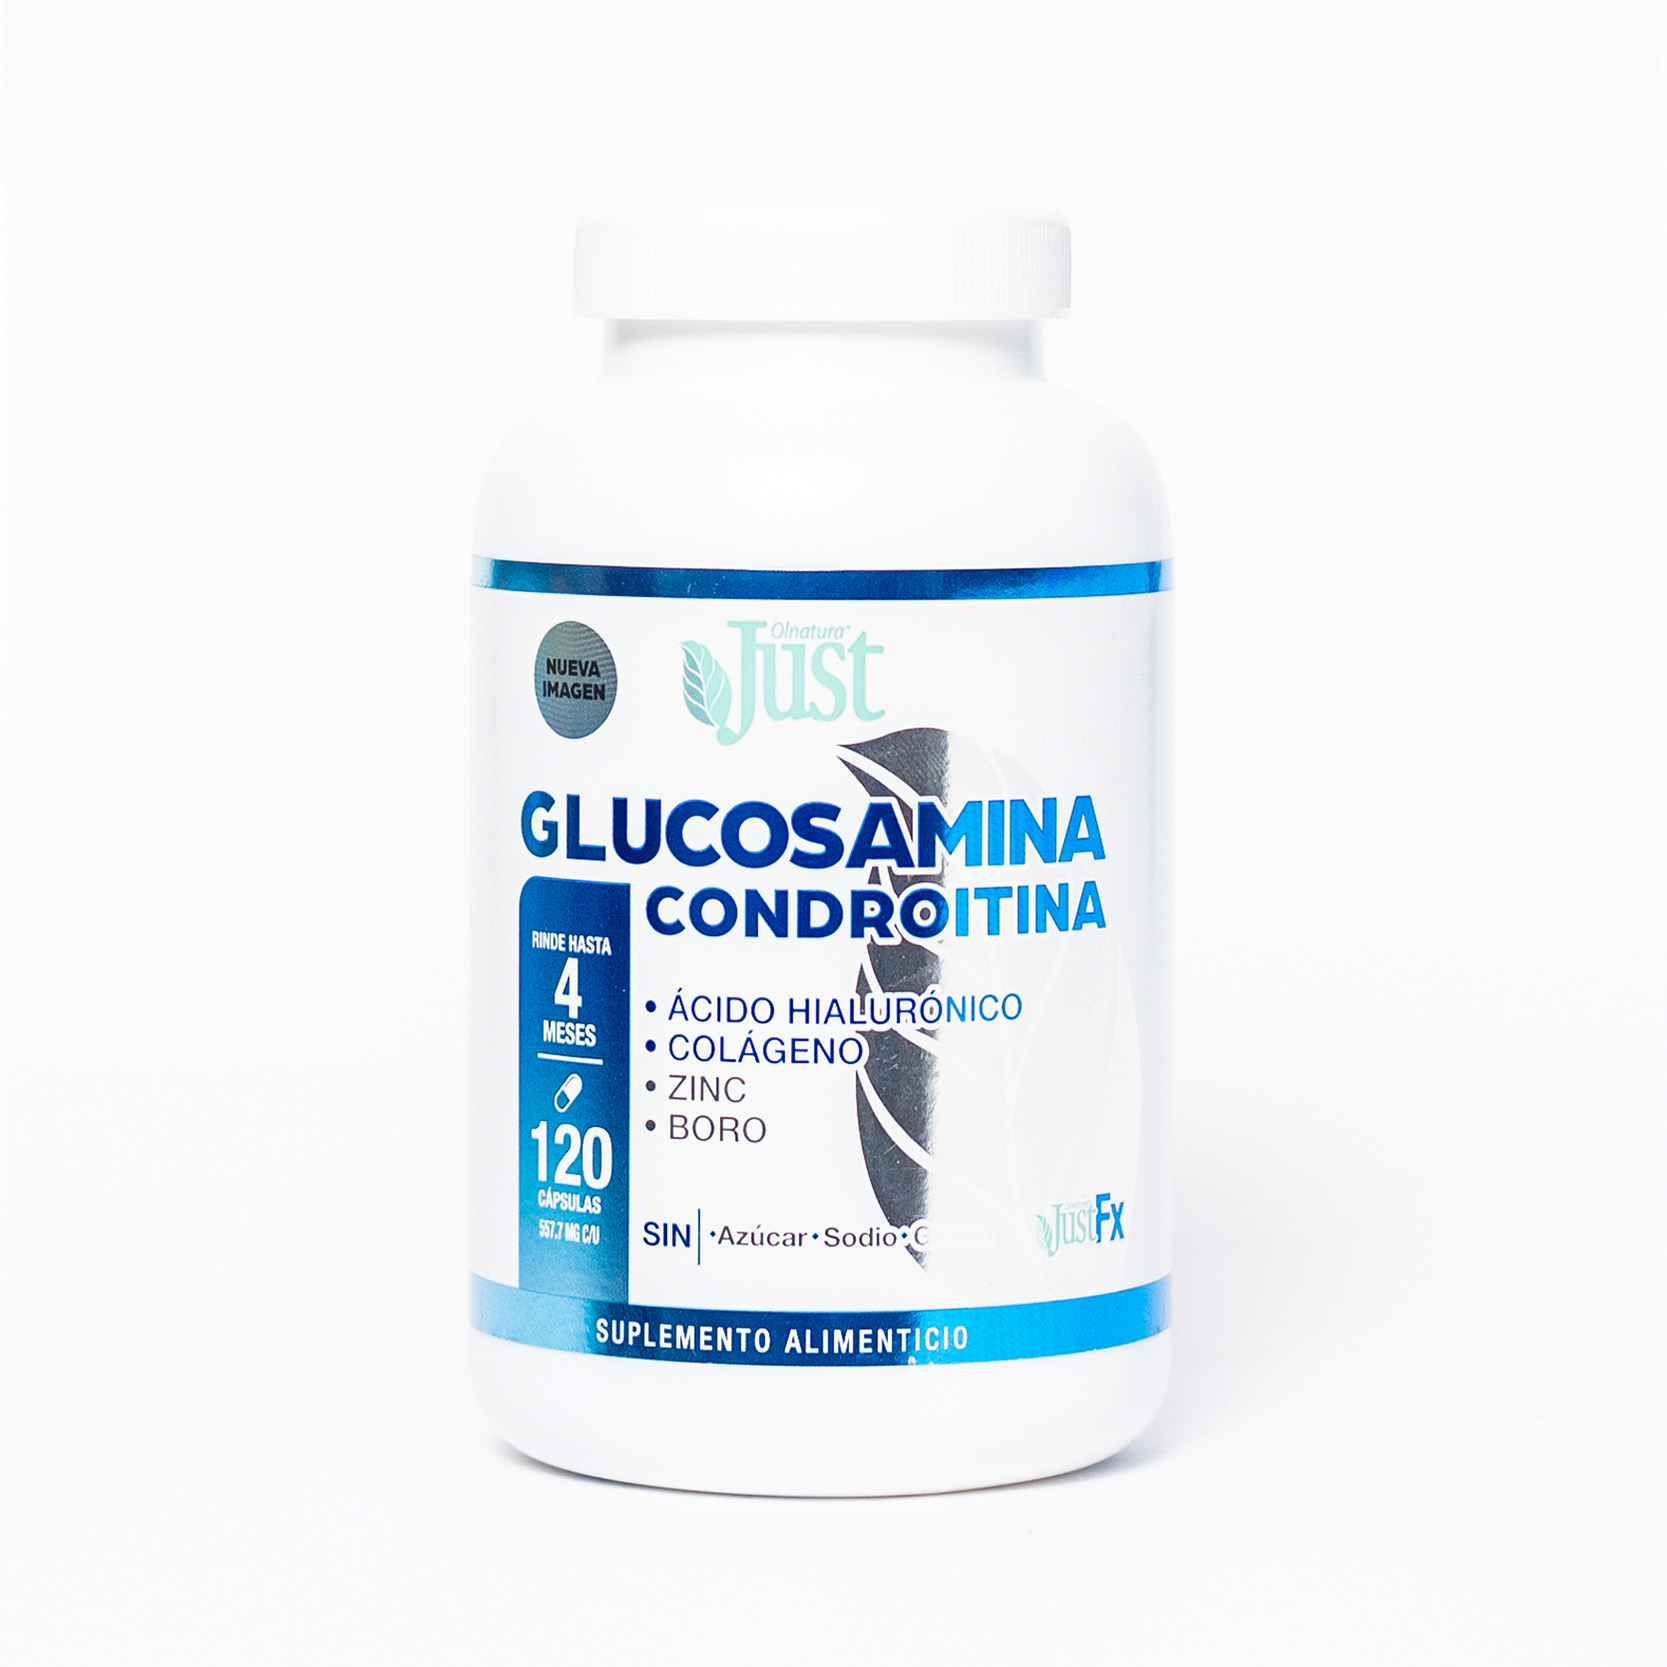 Glucosamina Condroitina Colageno Just Fx 120 Caps